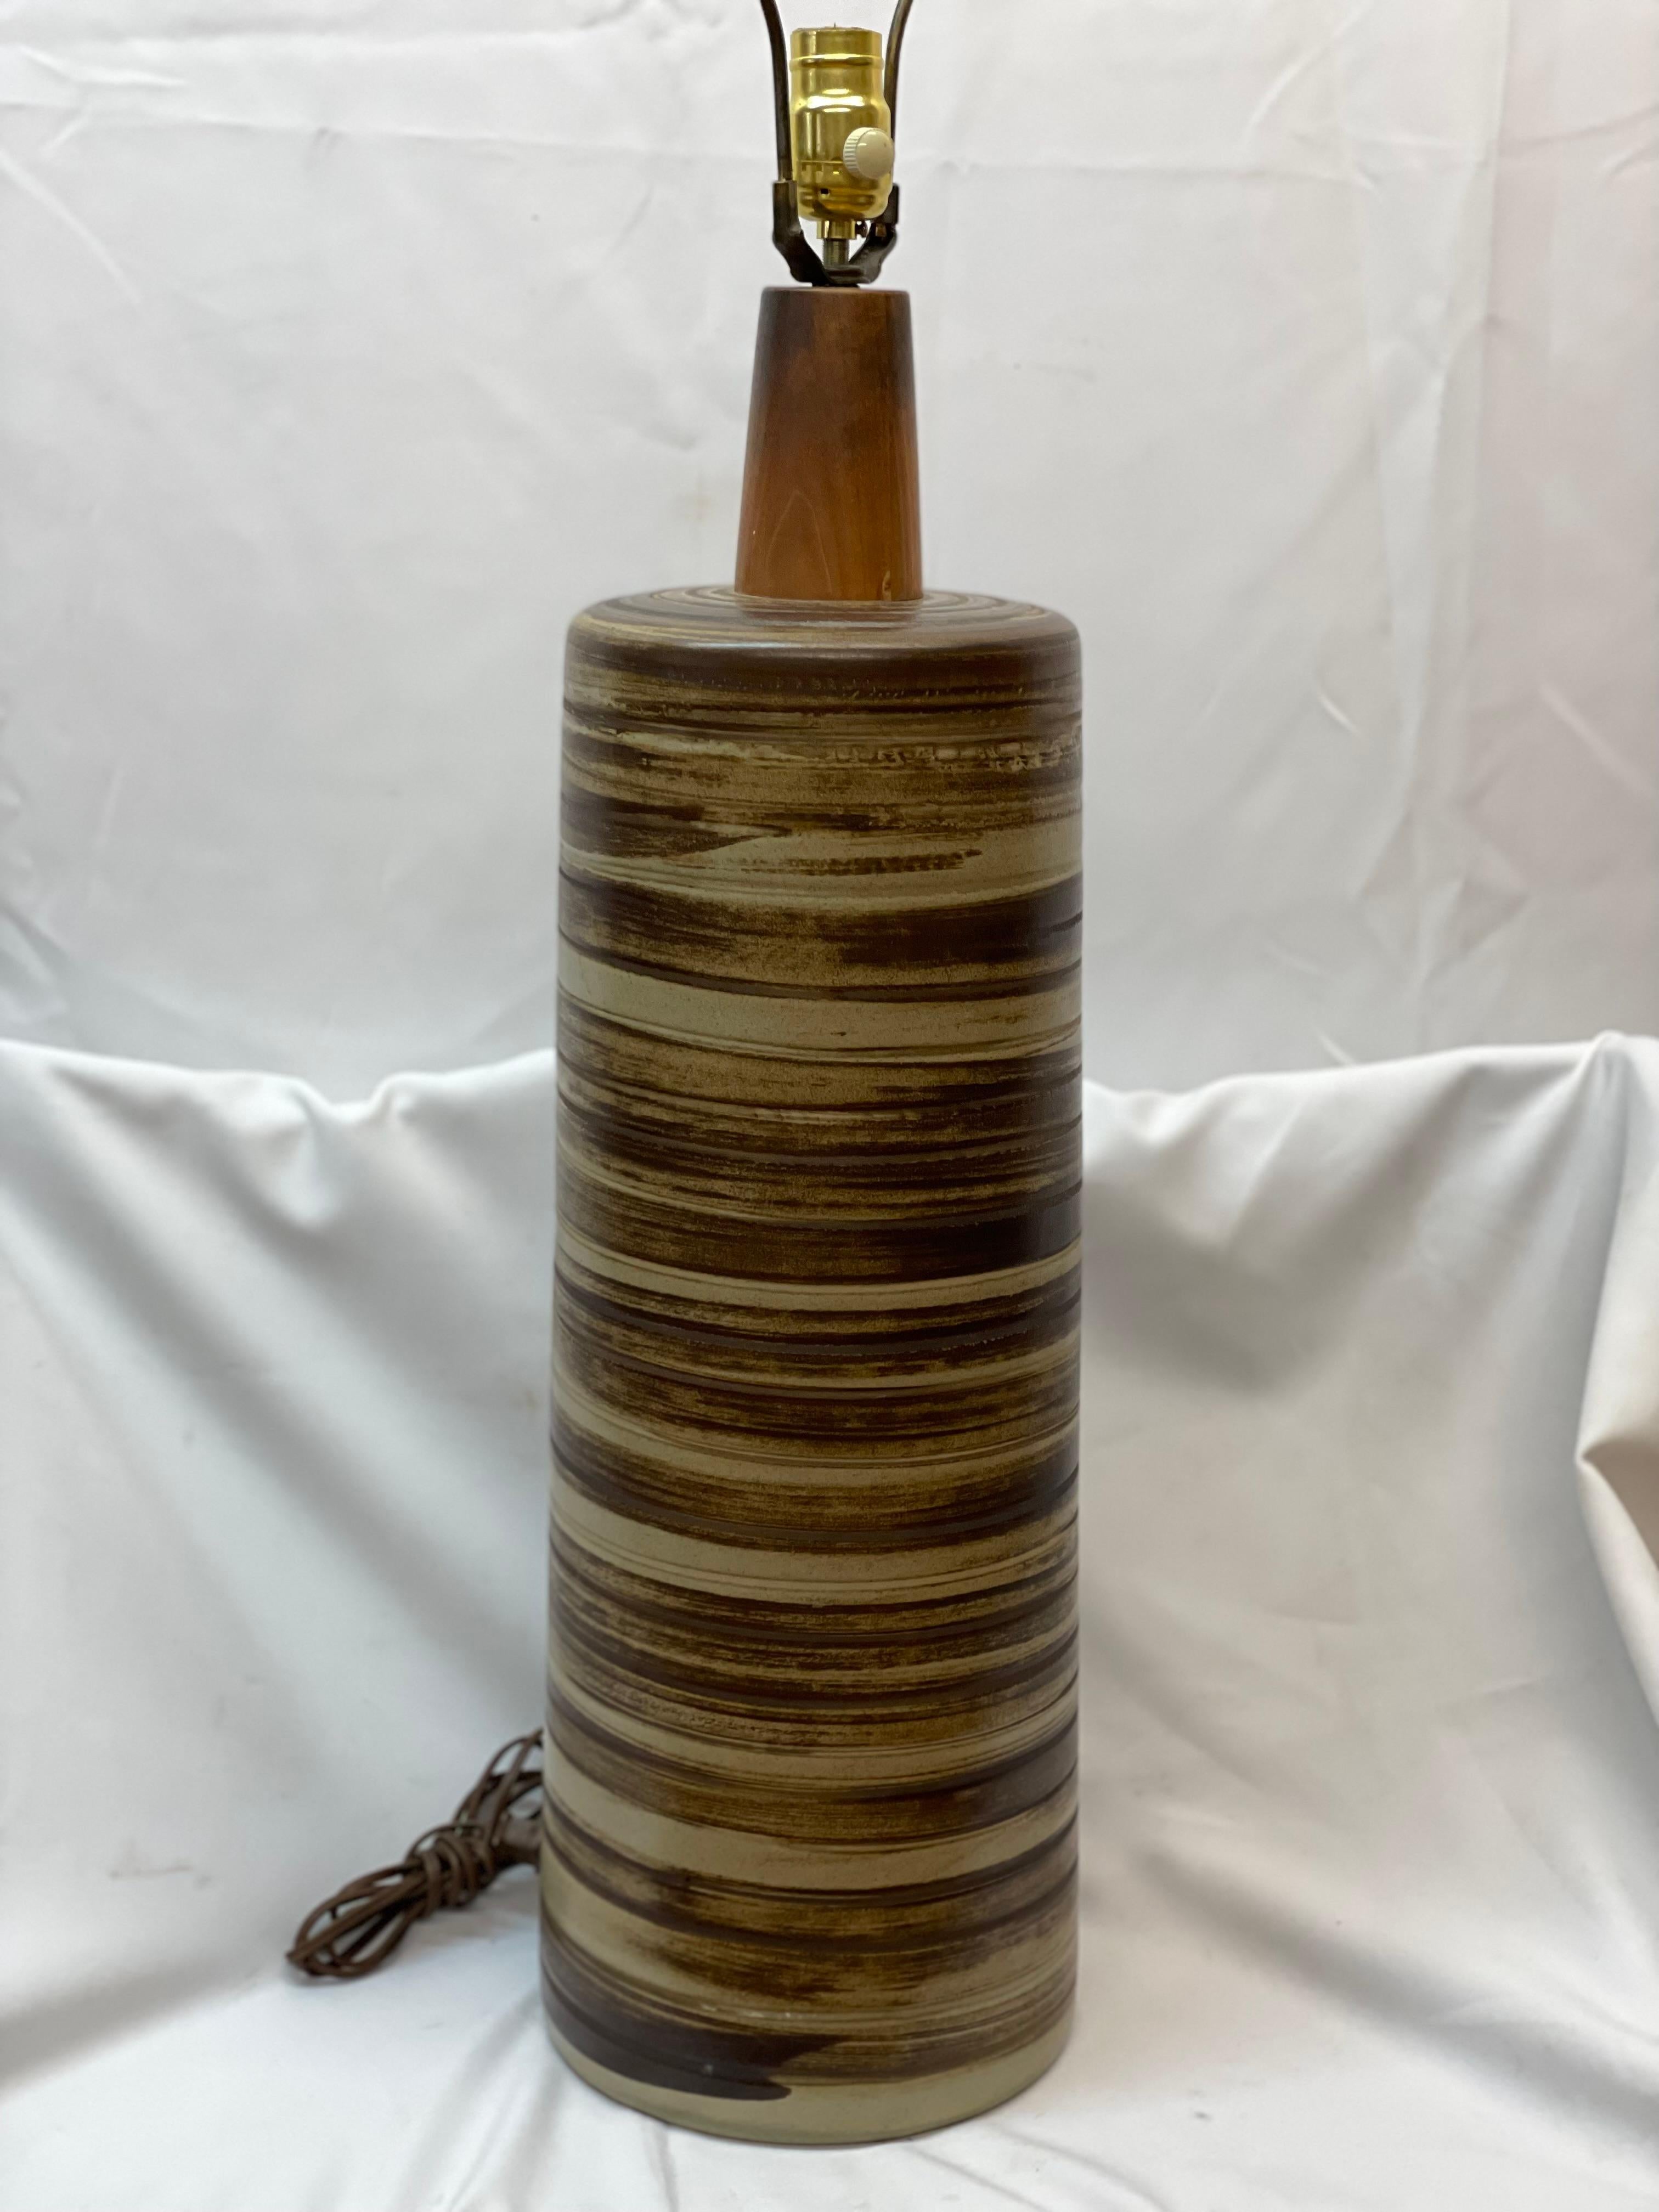 Martz Ceramic Table lamp w/Brown Swirl Design and Wood Finial

10x10x20